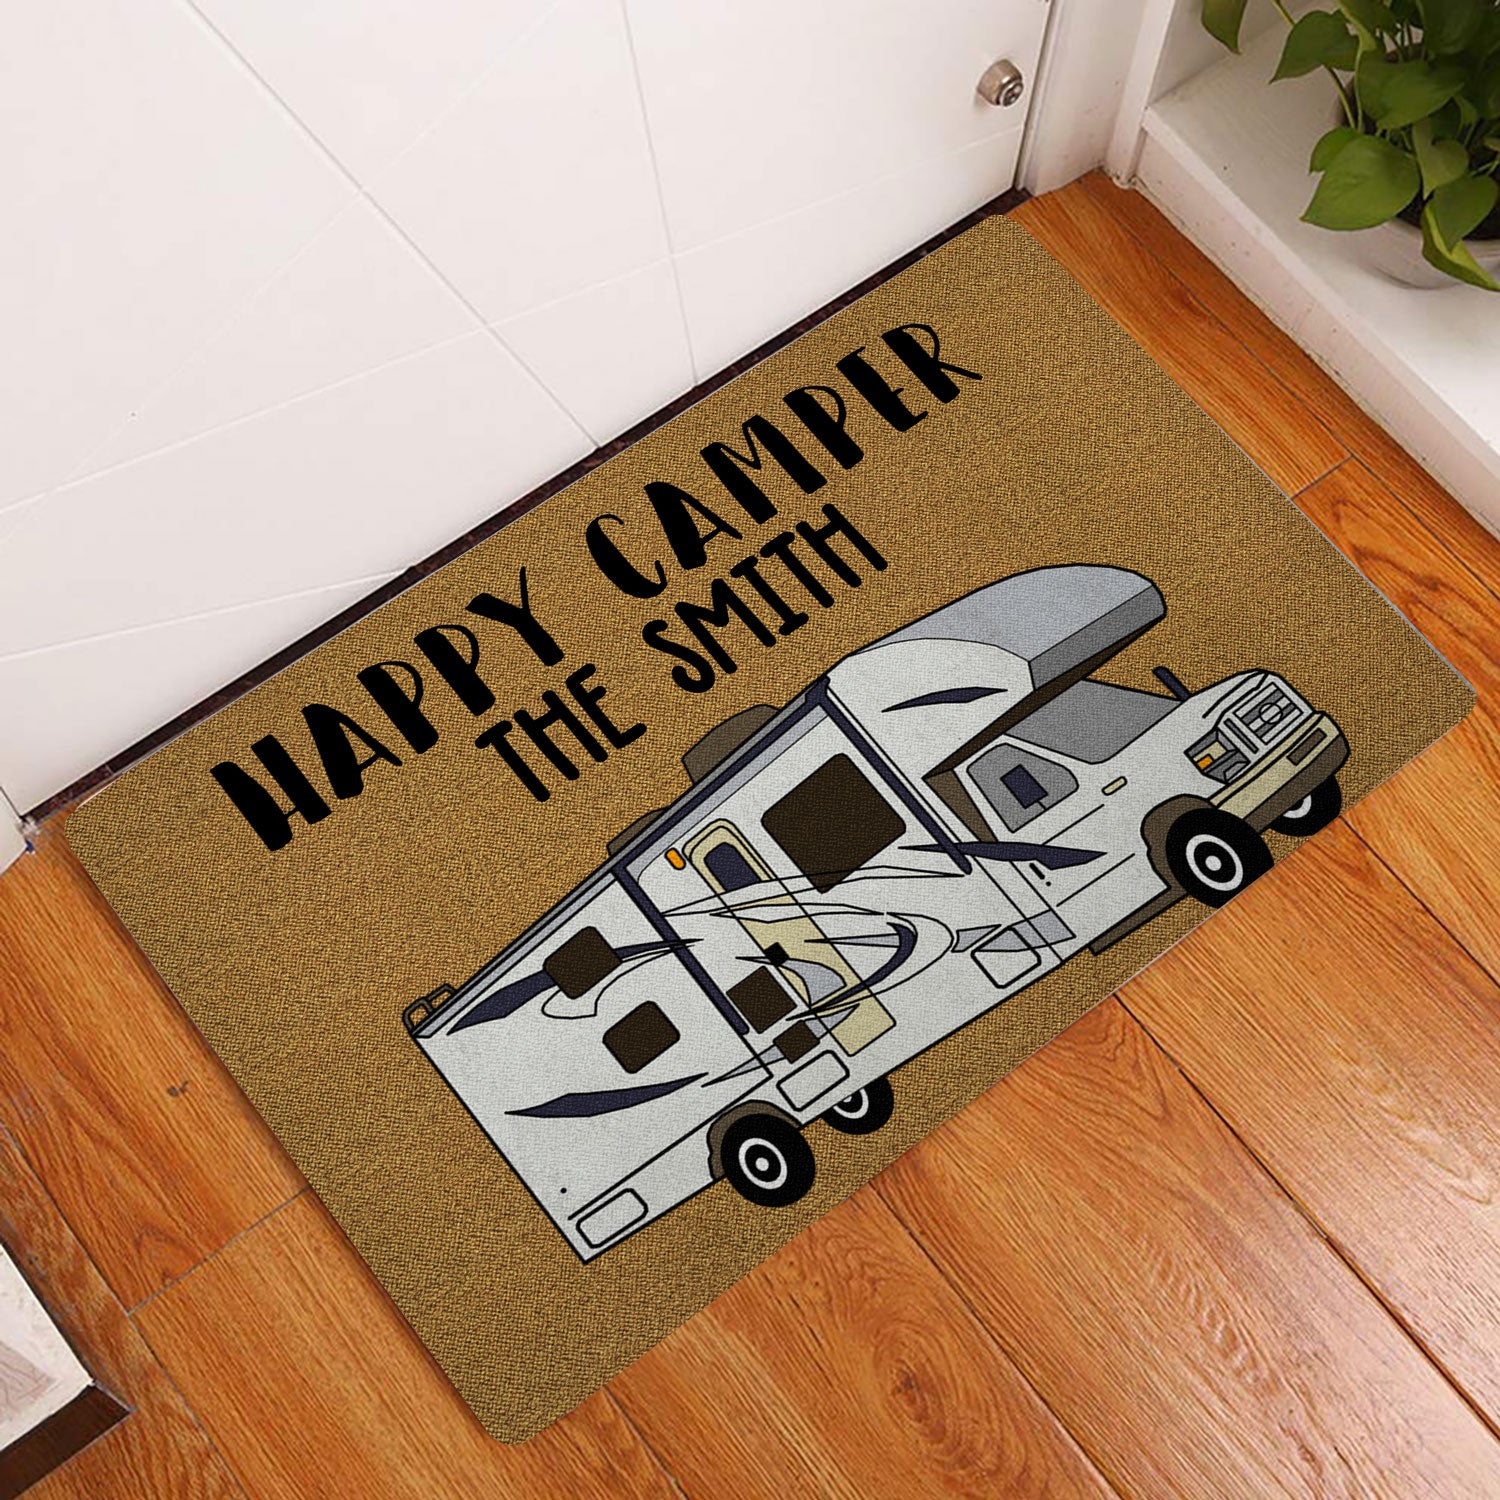 Personalized Happy Camper Doormat